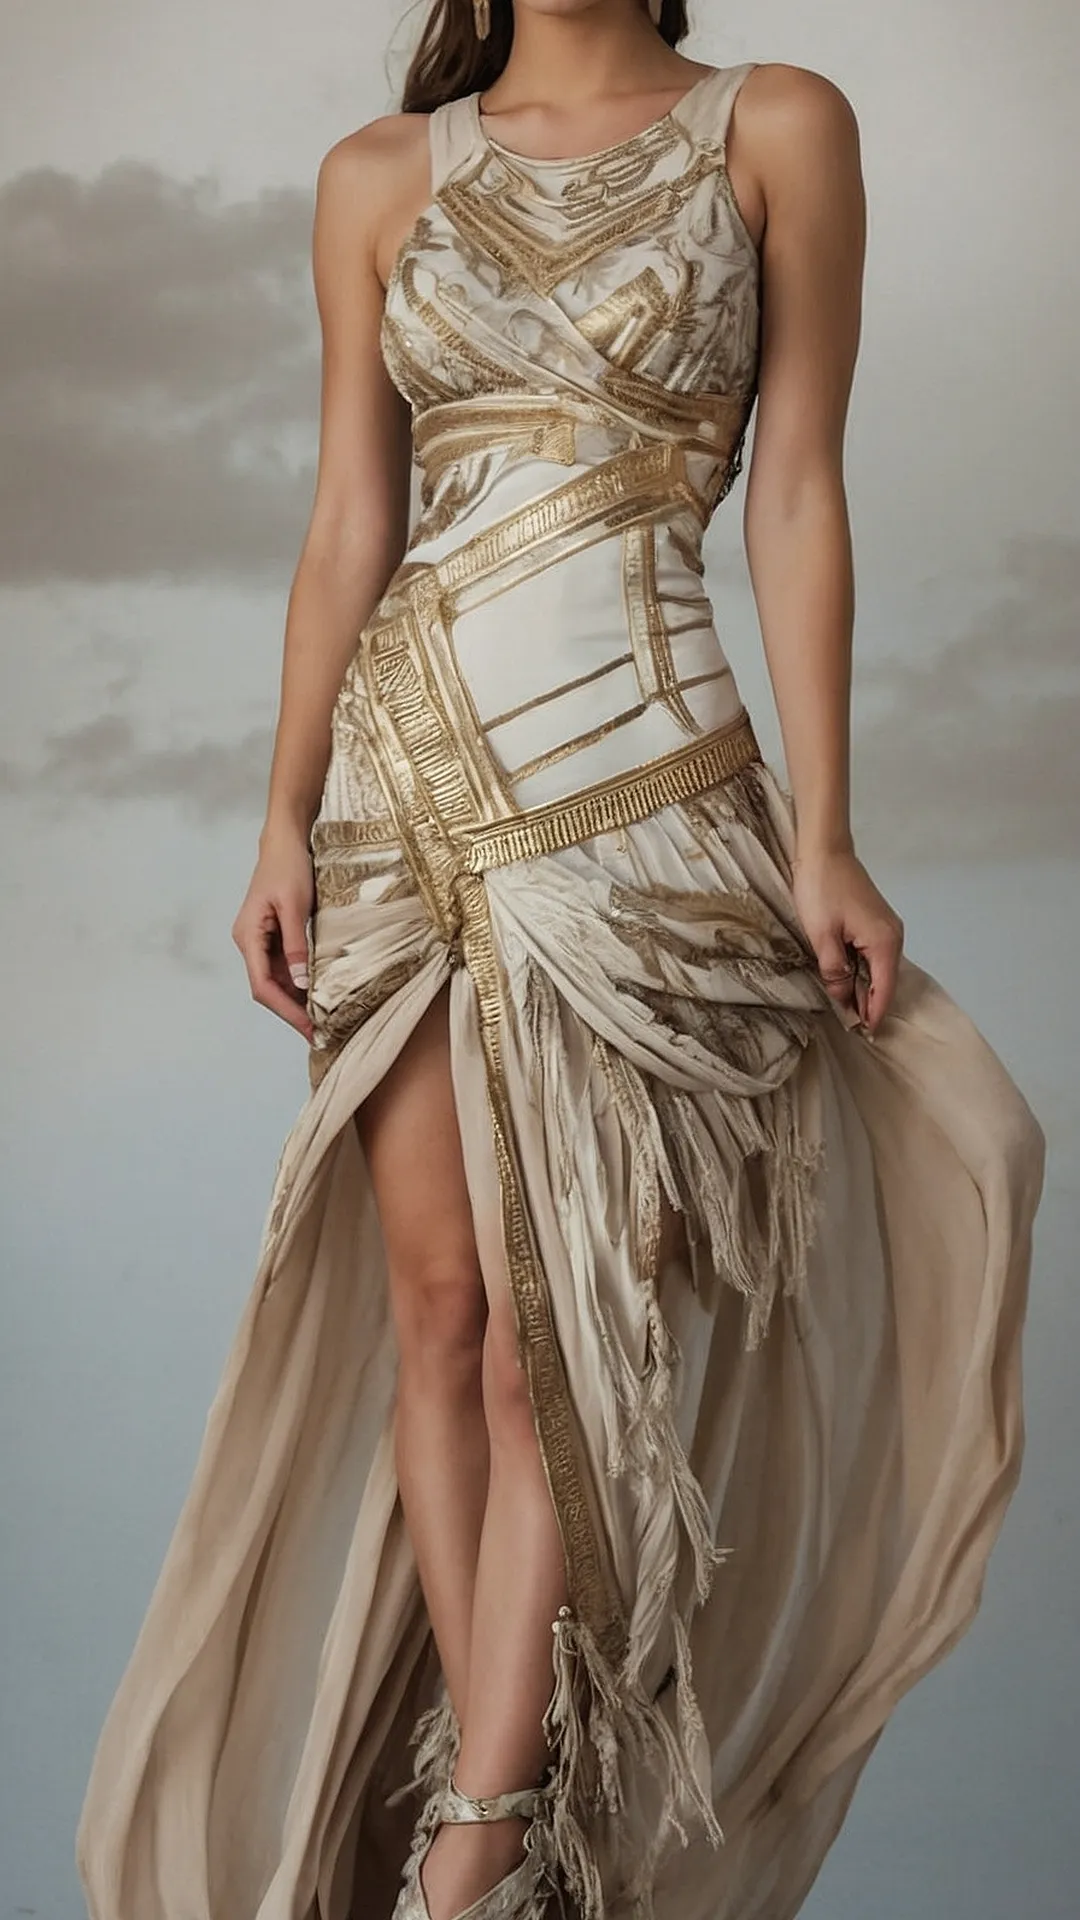 Goddess Glamour: Stunning Greek Dress Designs